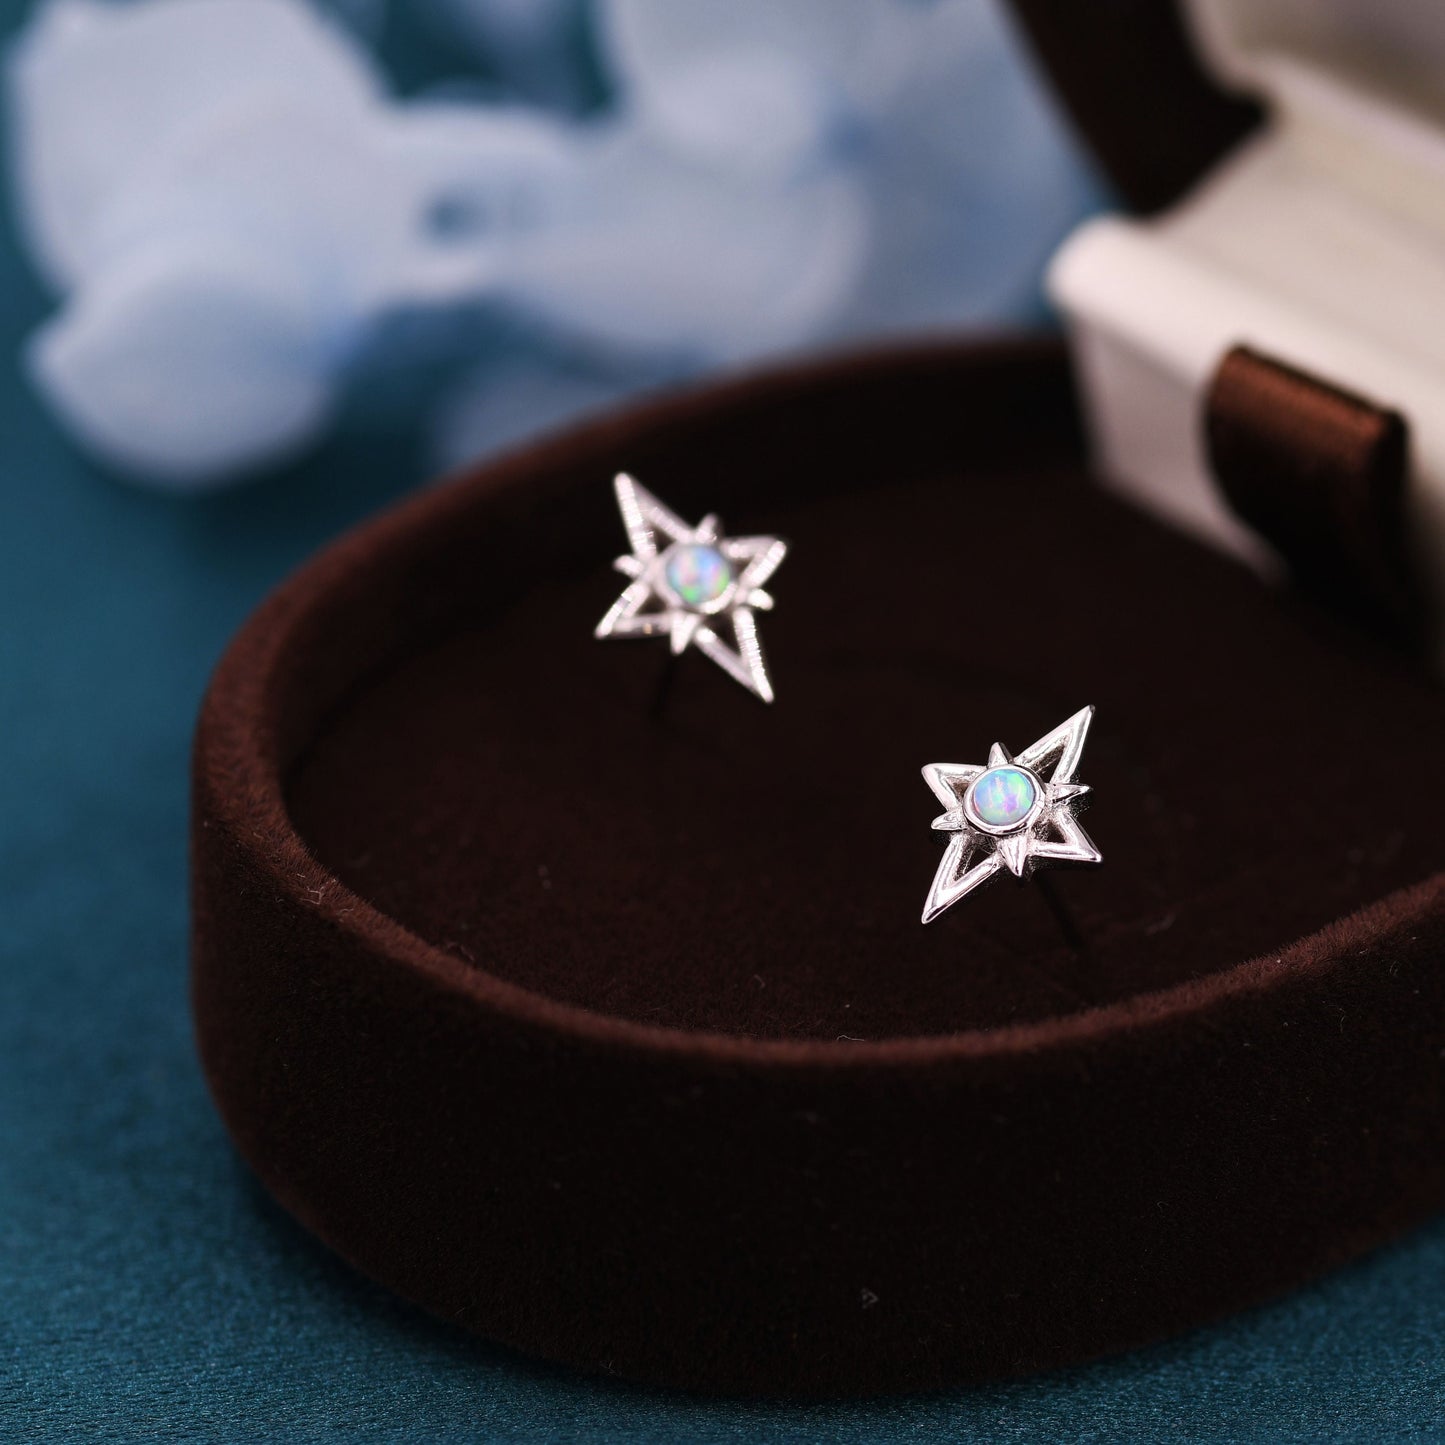 North Star Opal Stud Earrings in Sterling Silver - Gold or Silver - Opal Starburst Earrings - Petite Stud Earrings